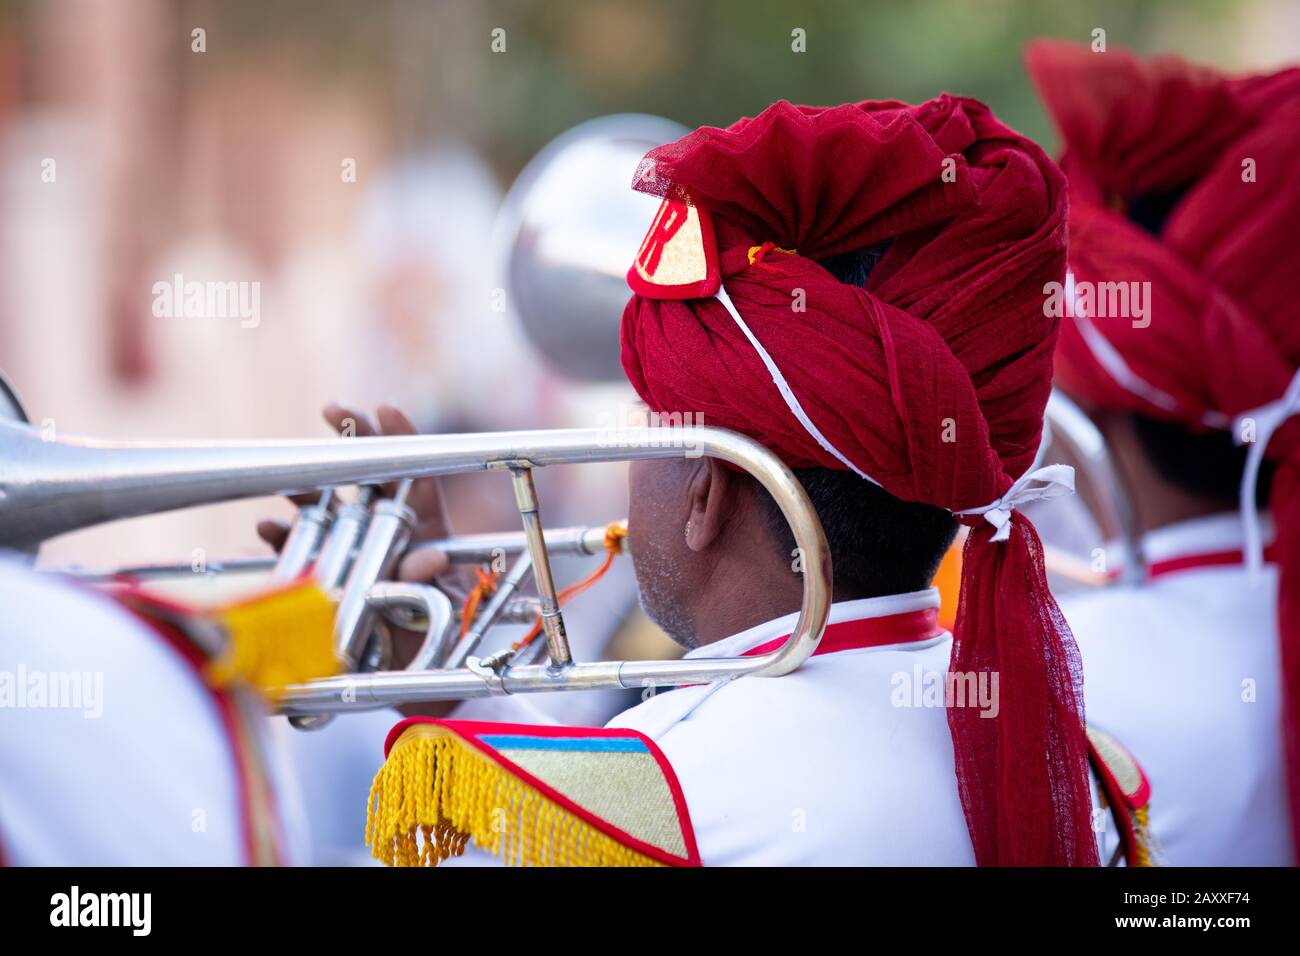 Man Playing trumpet In Indian Wedding Wearing Colorful Dress Stock Photo